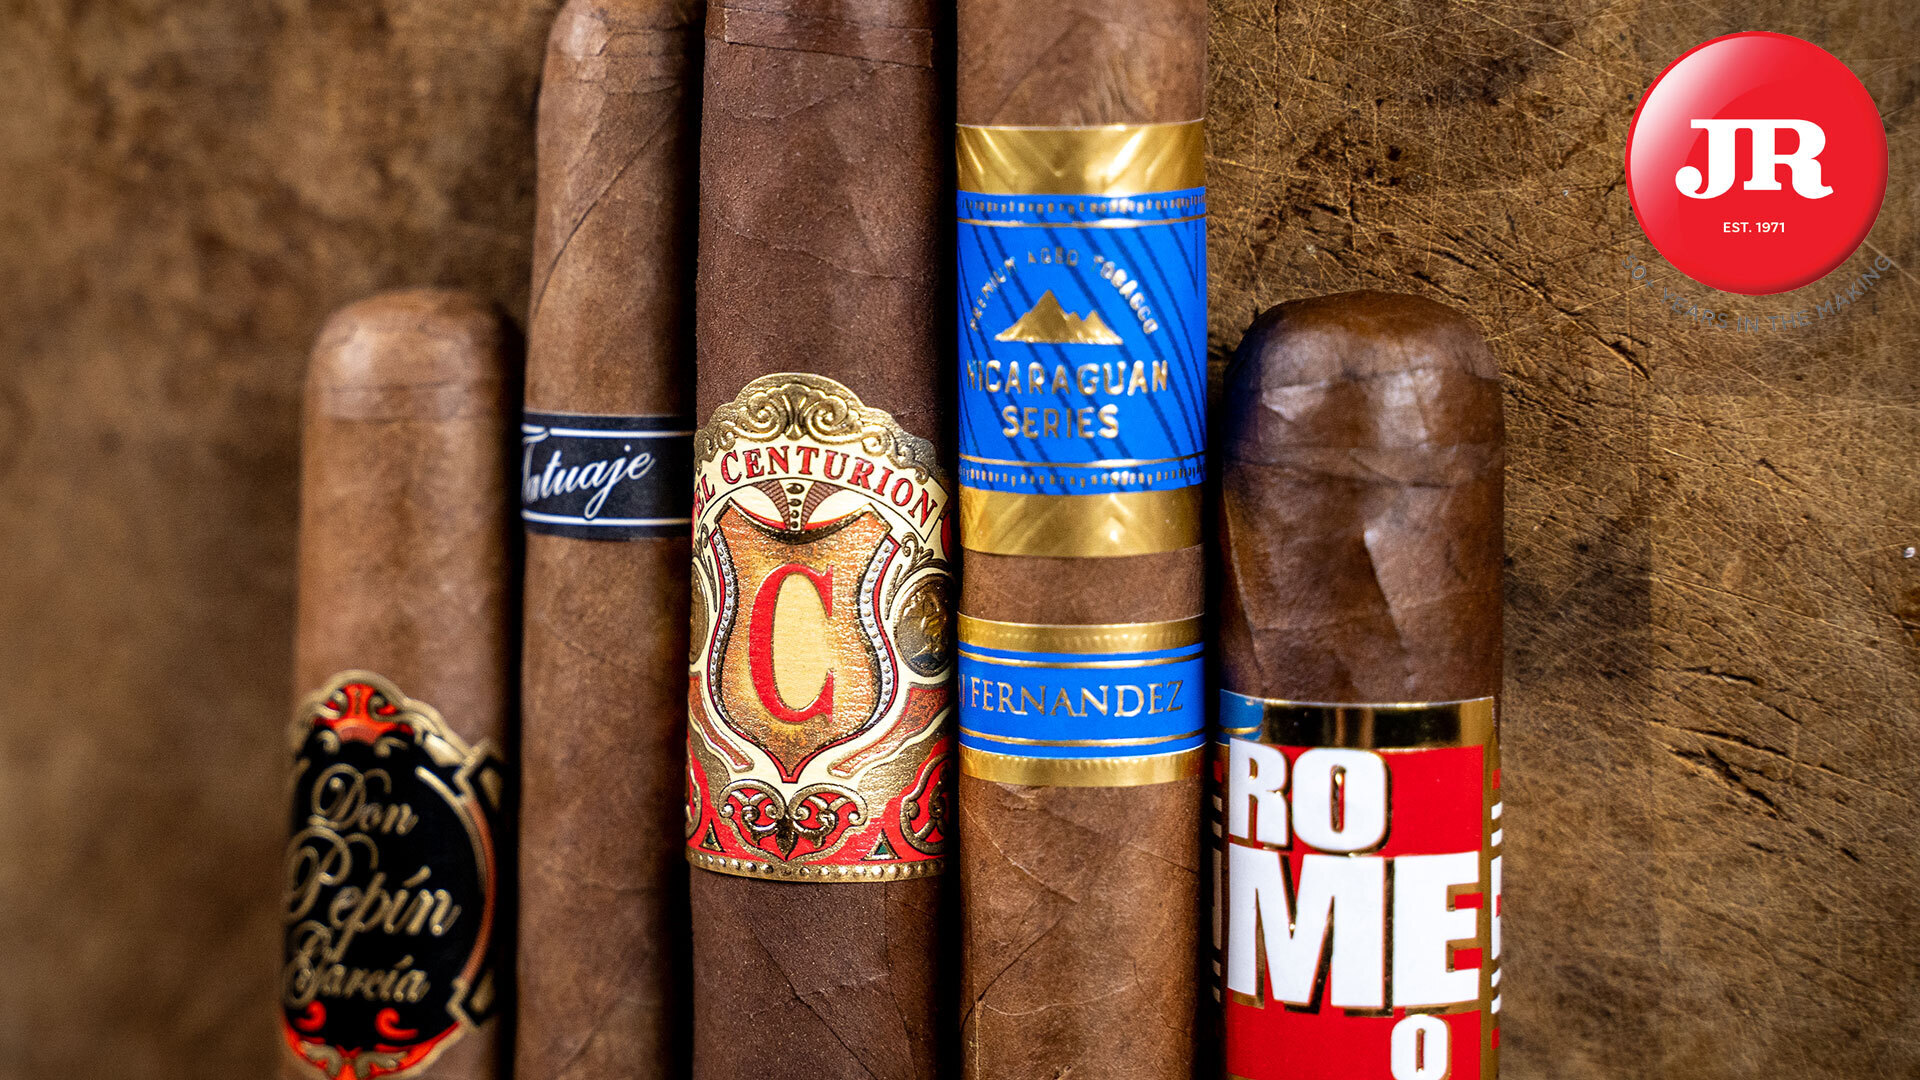 Top 10 Best Cigars Under 5 Dollars